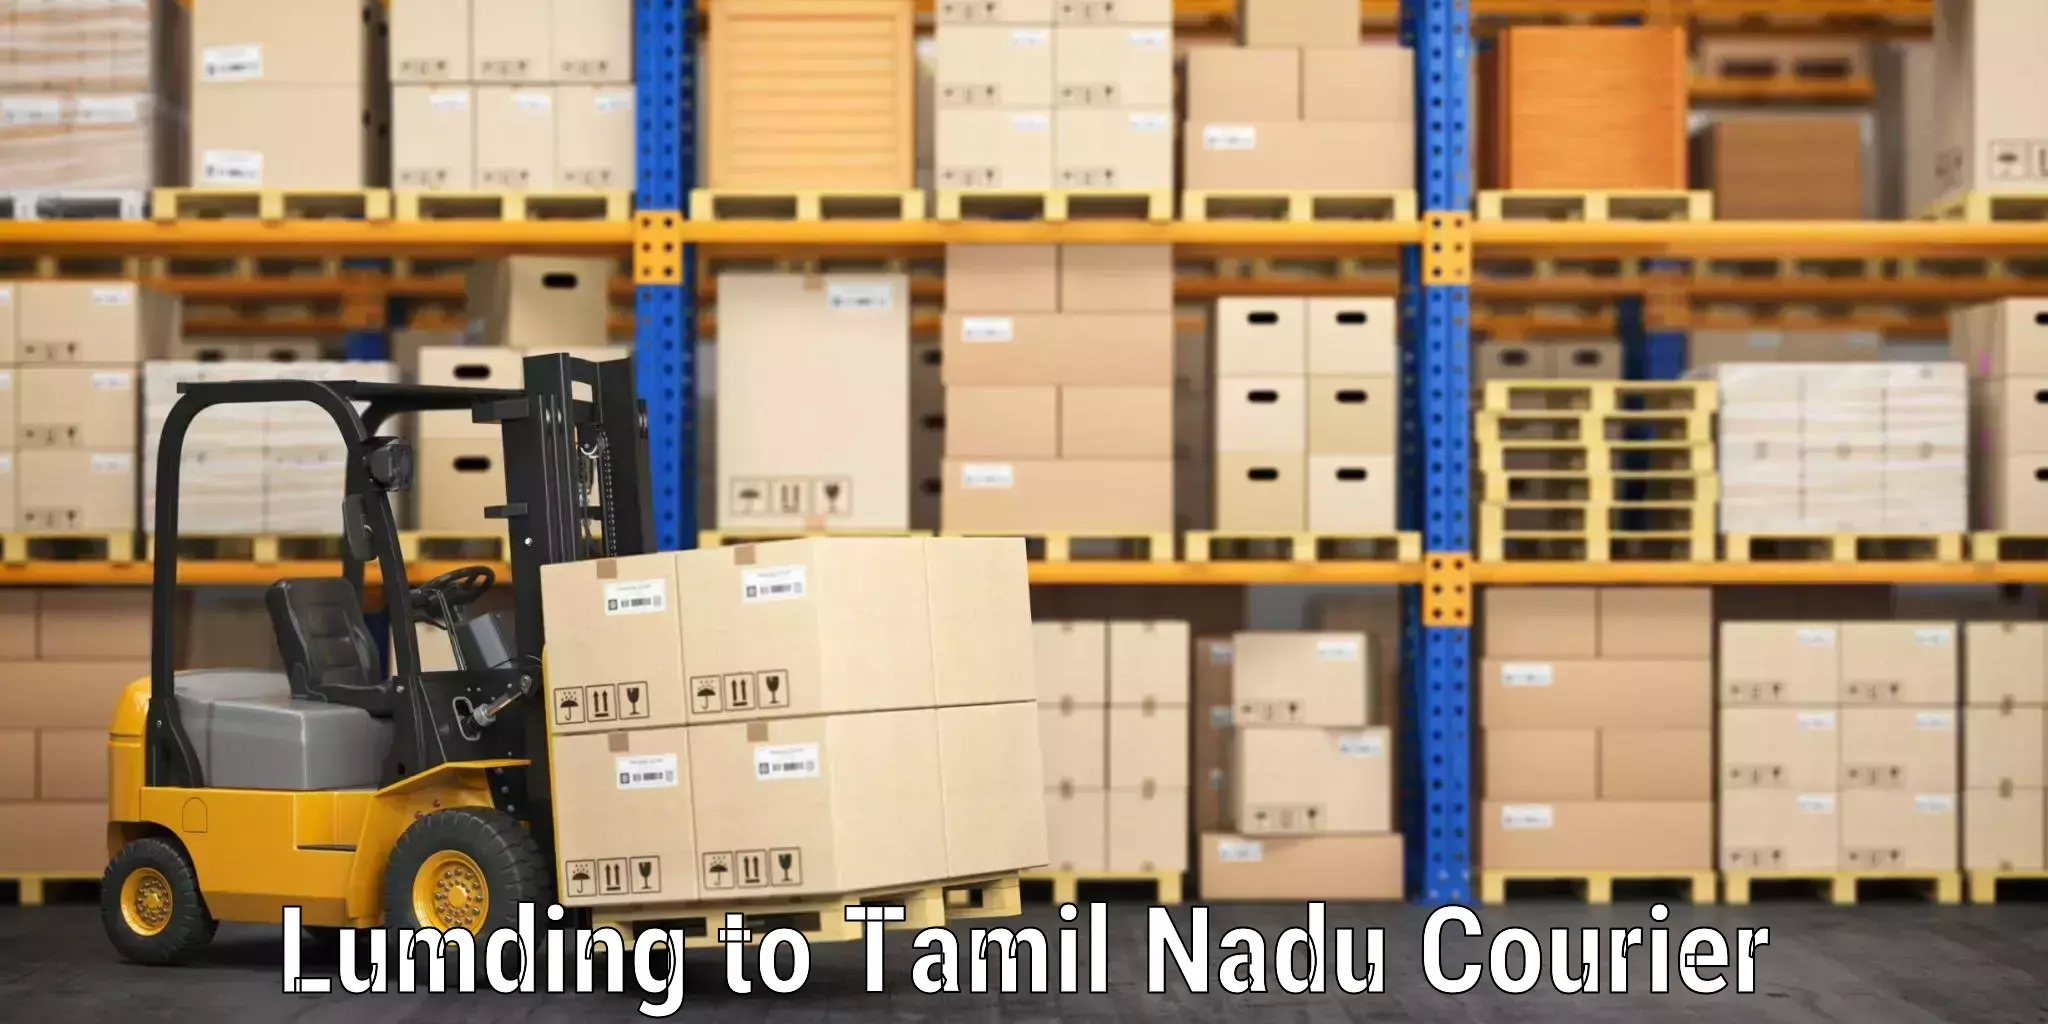 Hassle-free luggage shipping Lumding to Chennai